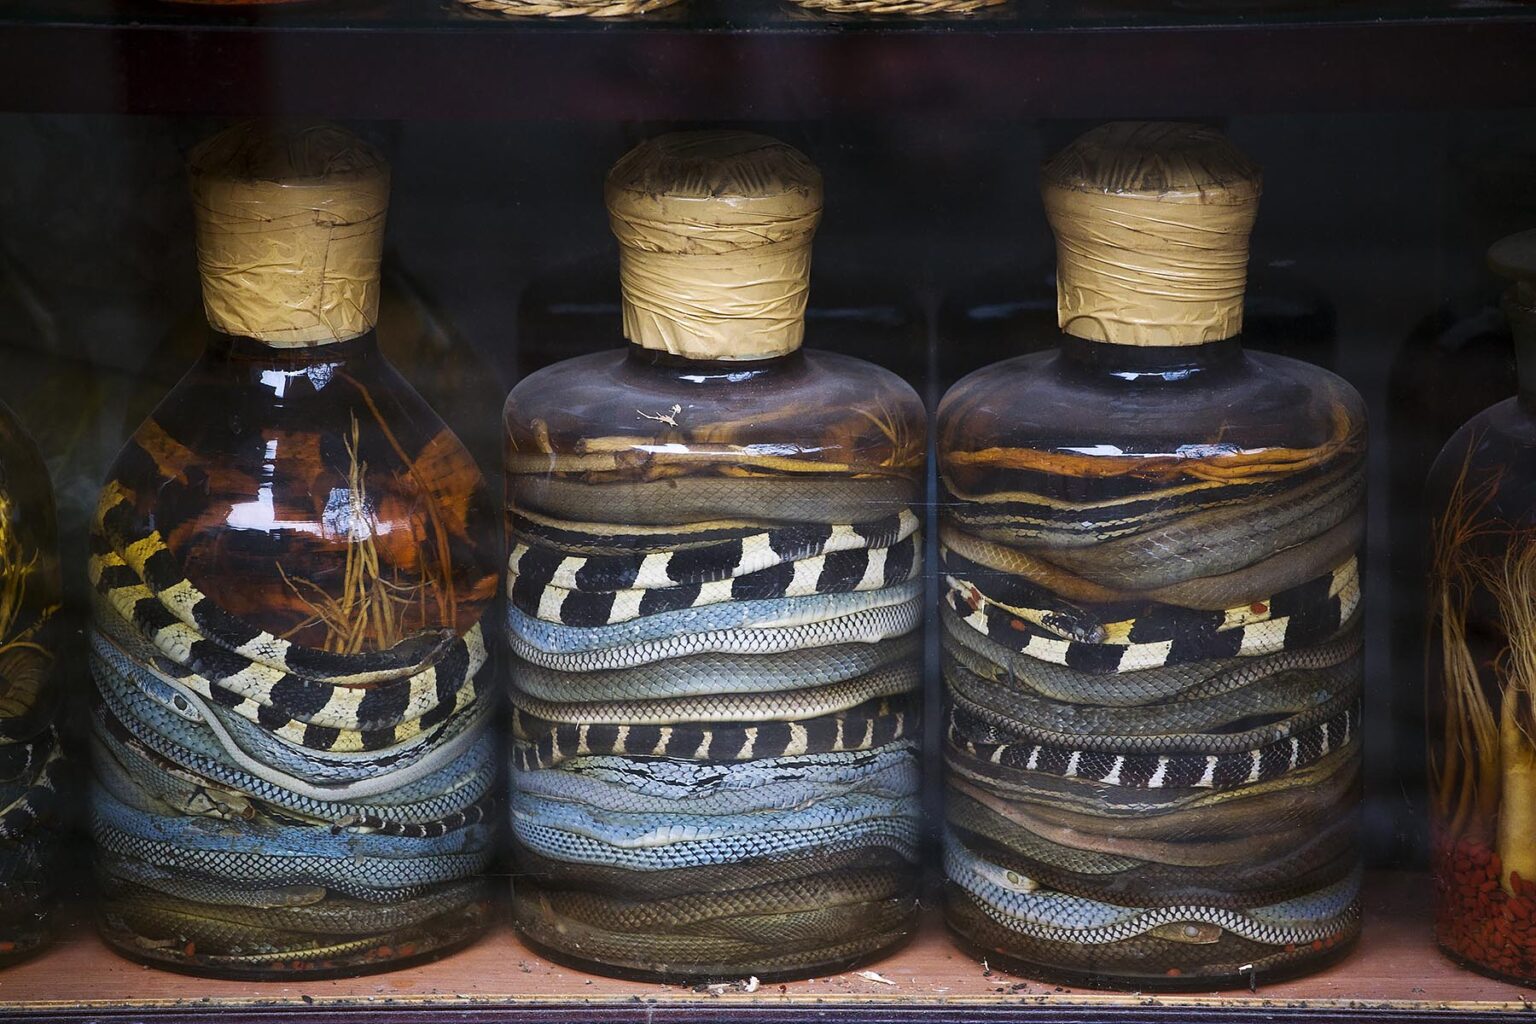 Colorful jars of SNAKE WINE ferment on the shelves of a shop - HANOI, VIETNAM